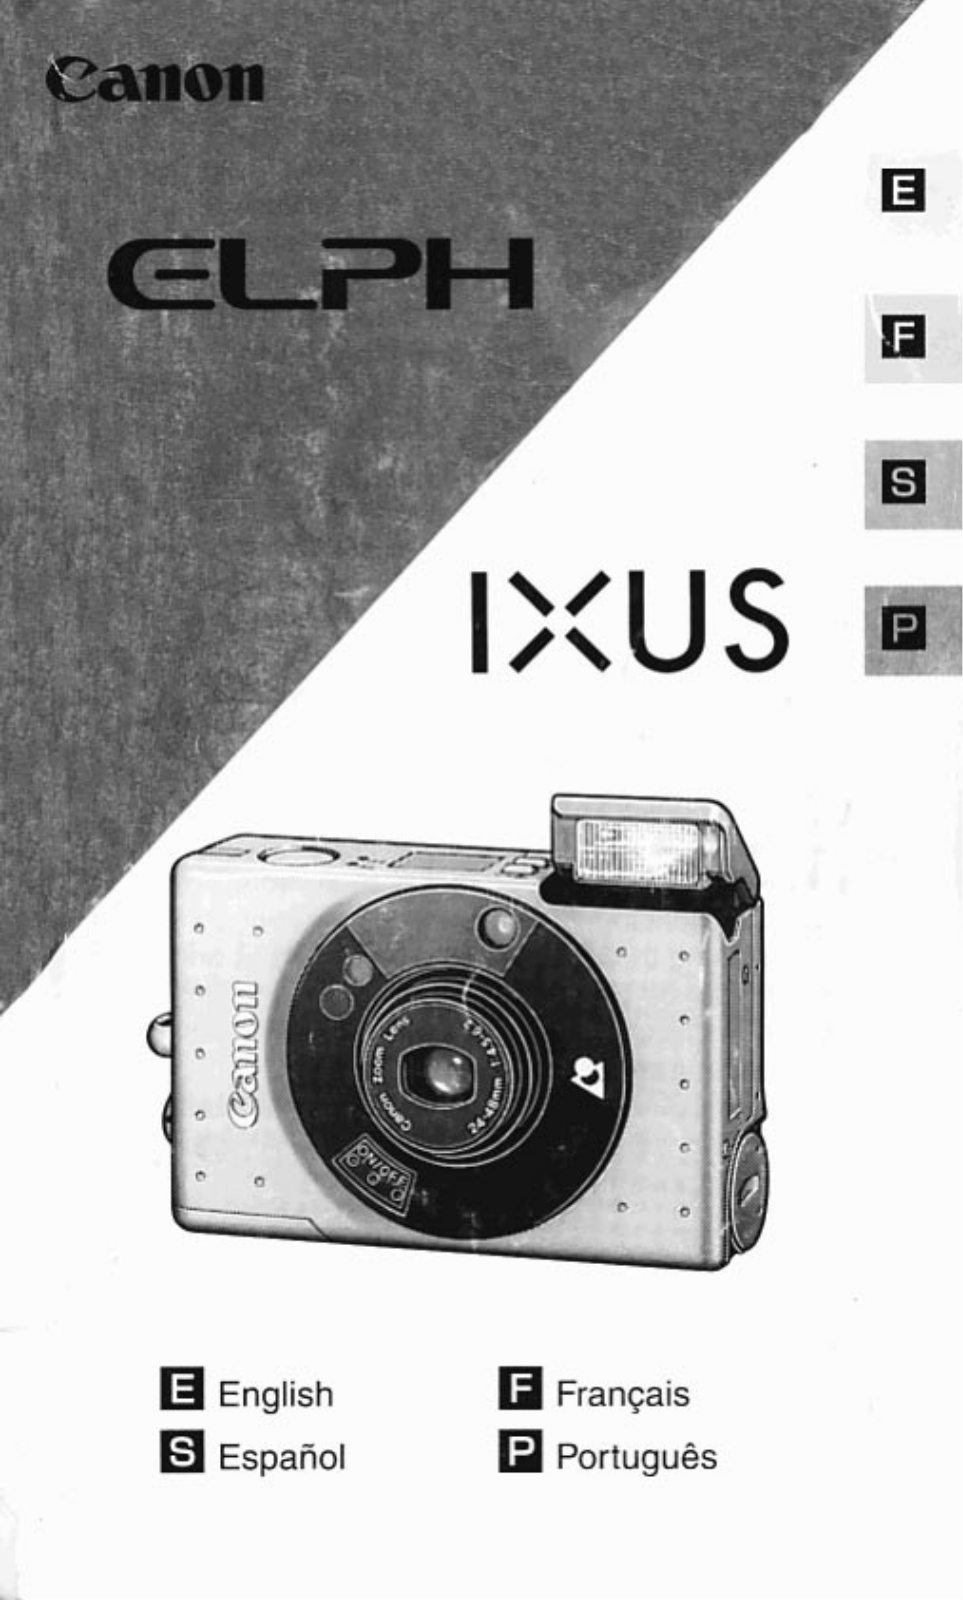 Canon ELPH, IXUS User Manual